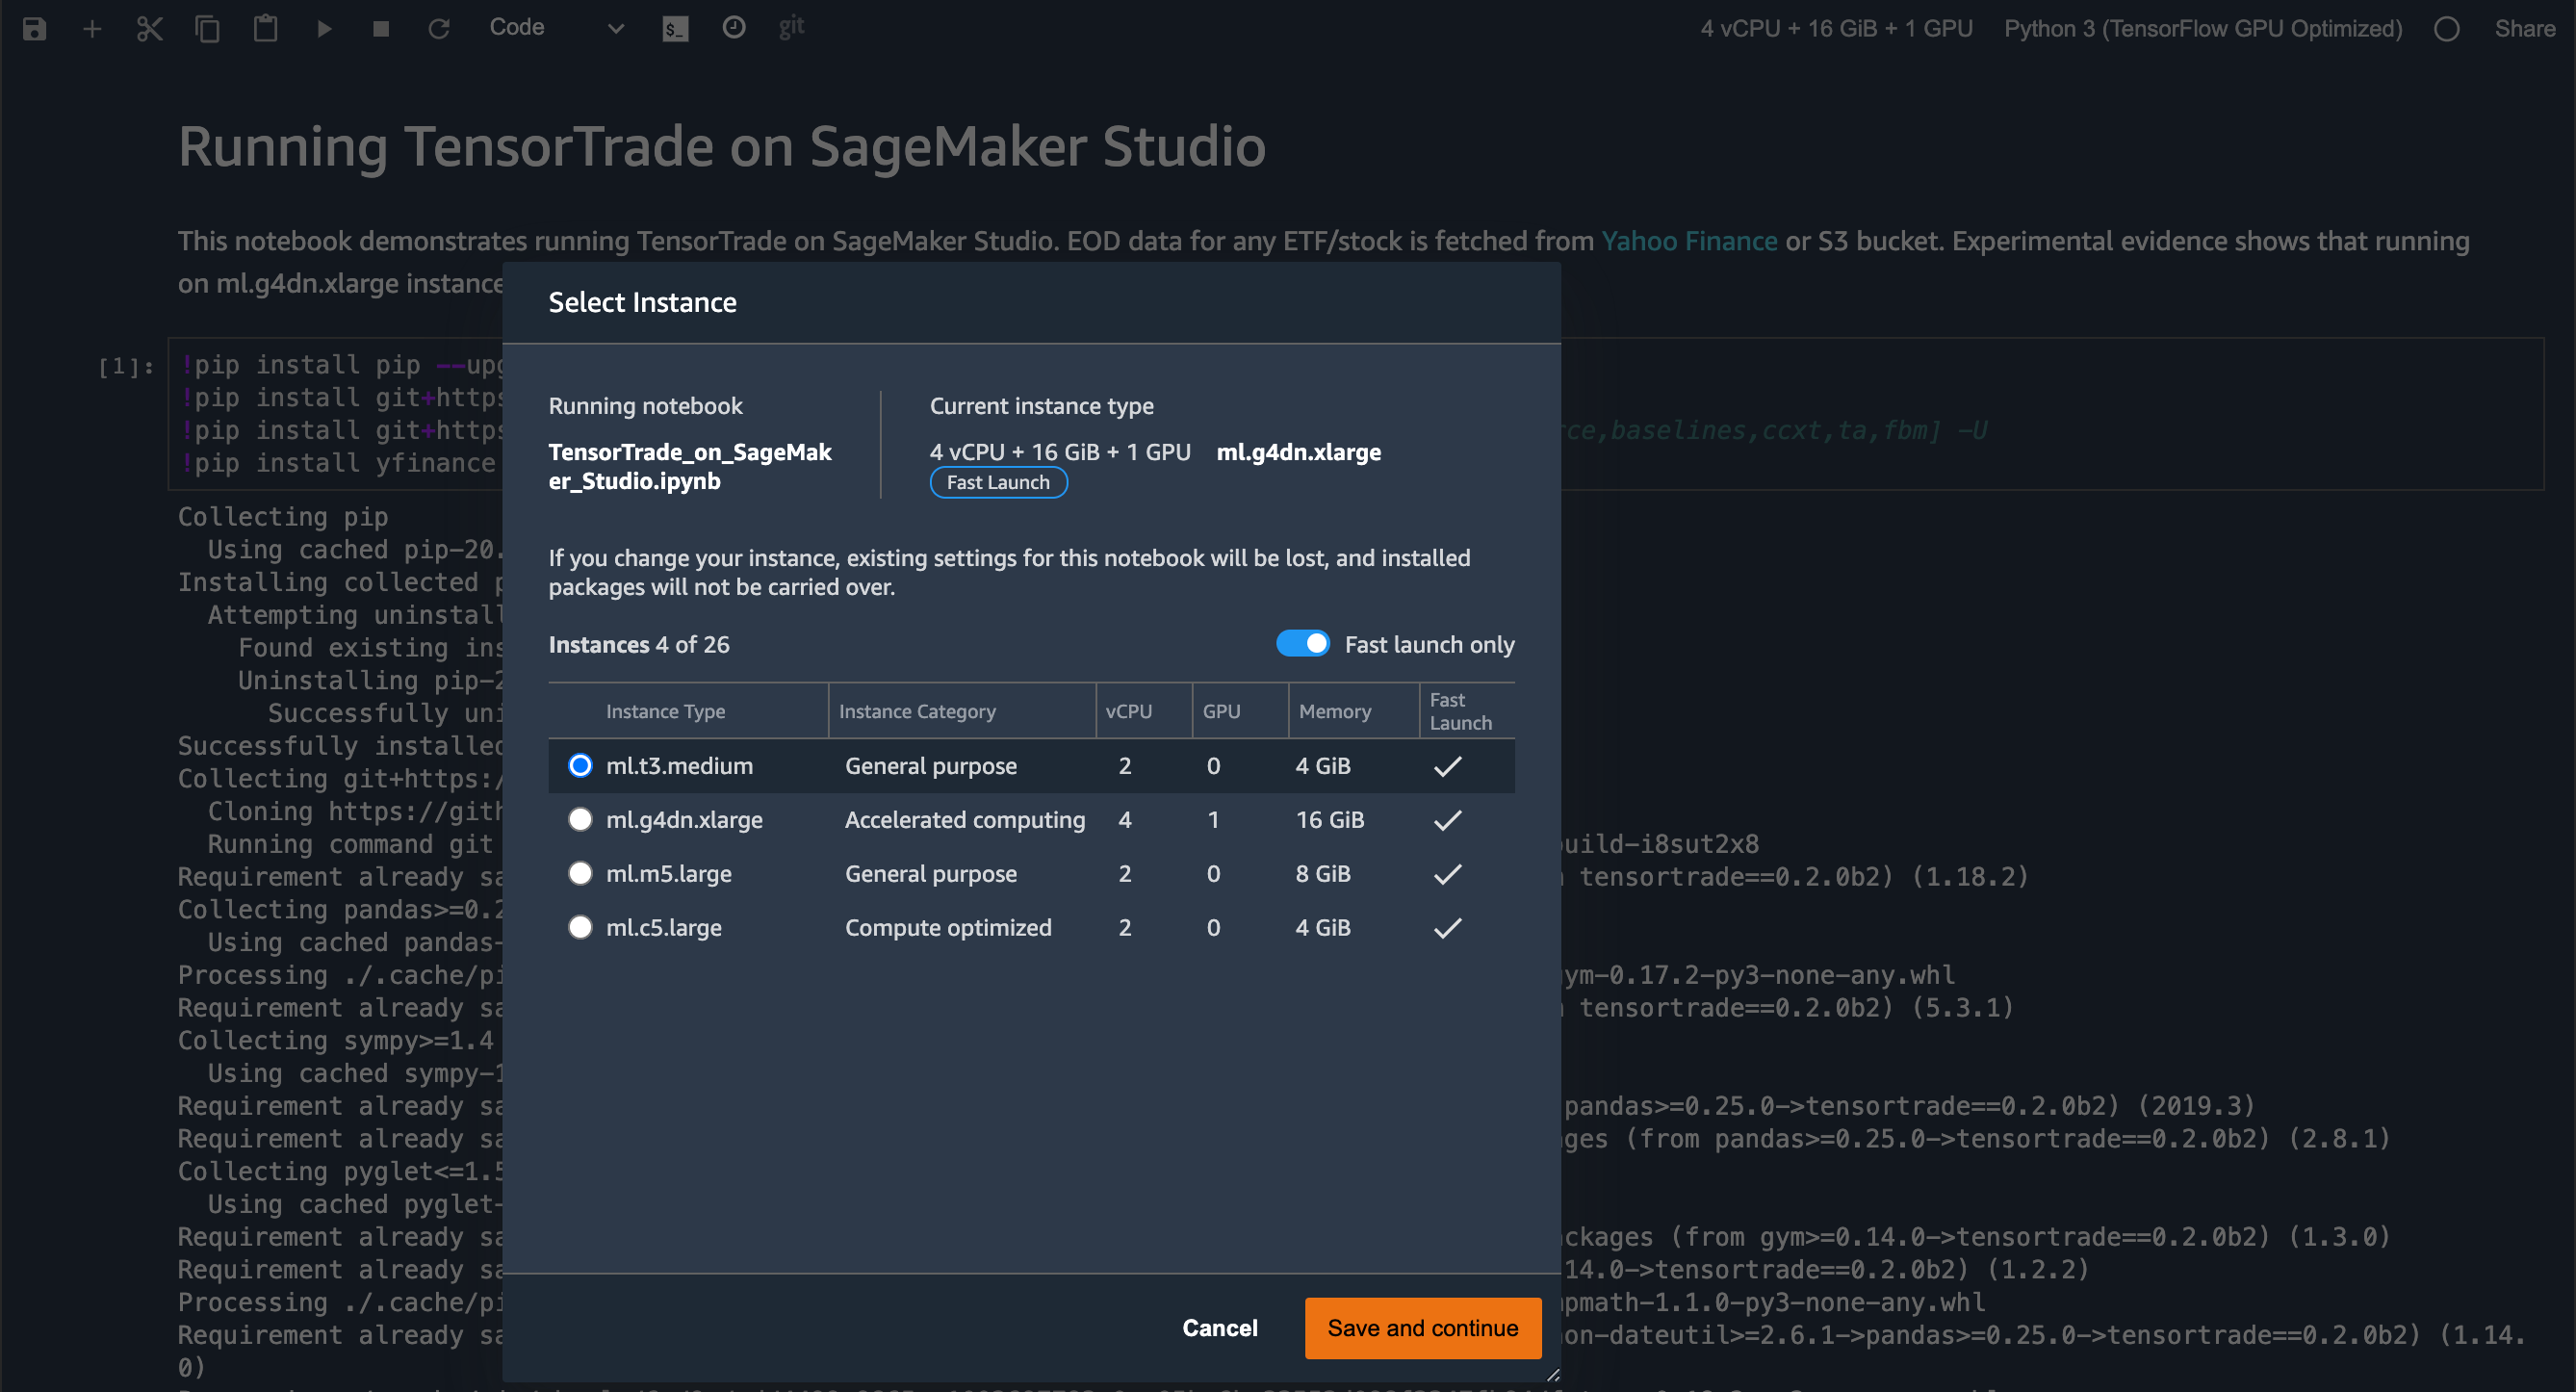 TensorTrade on Amazon SageMaker Studio 